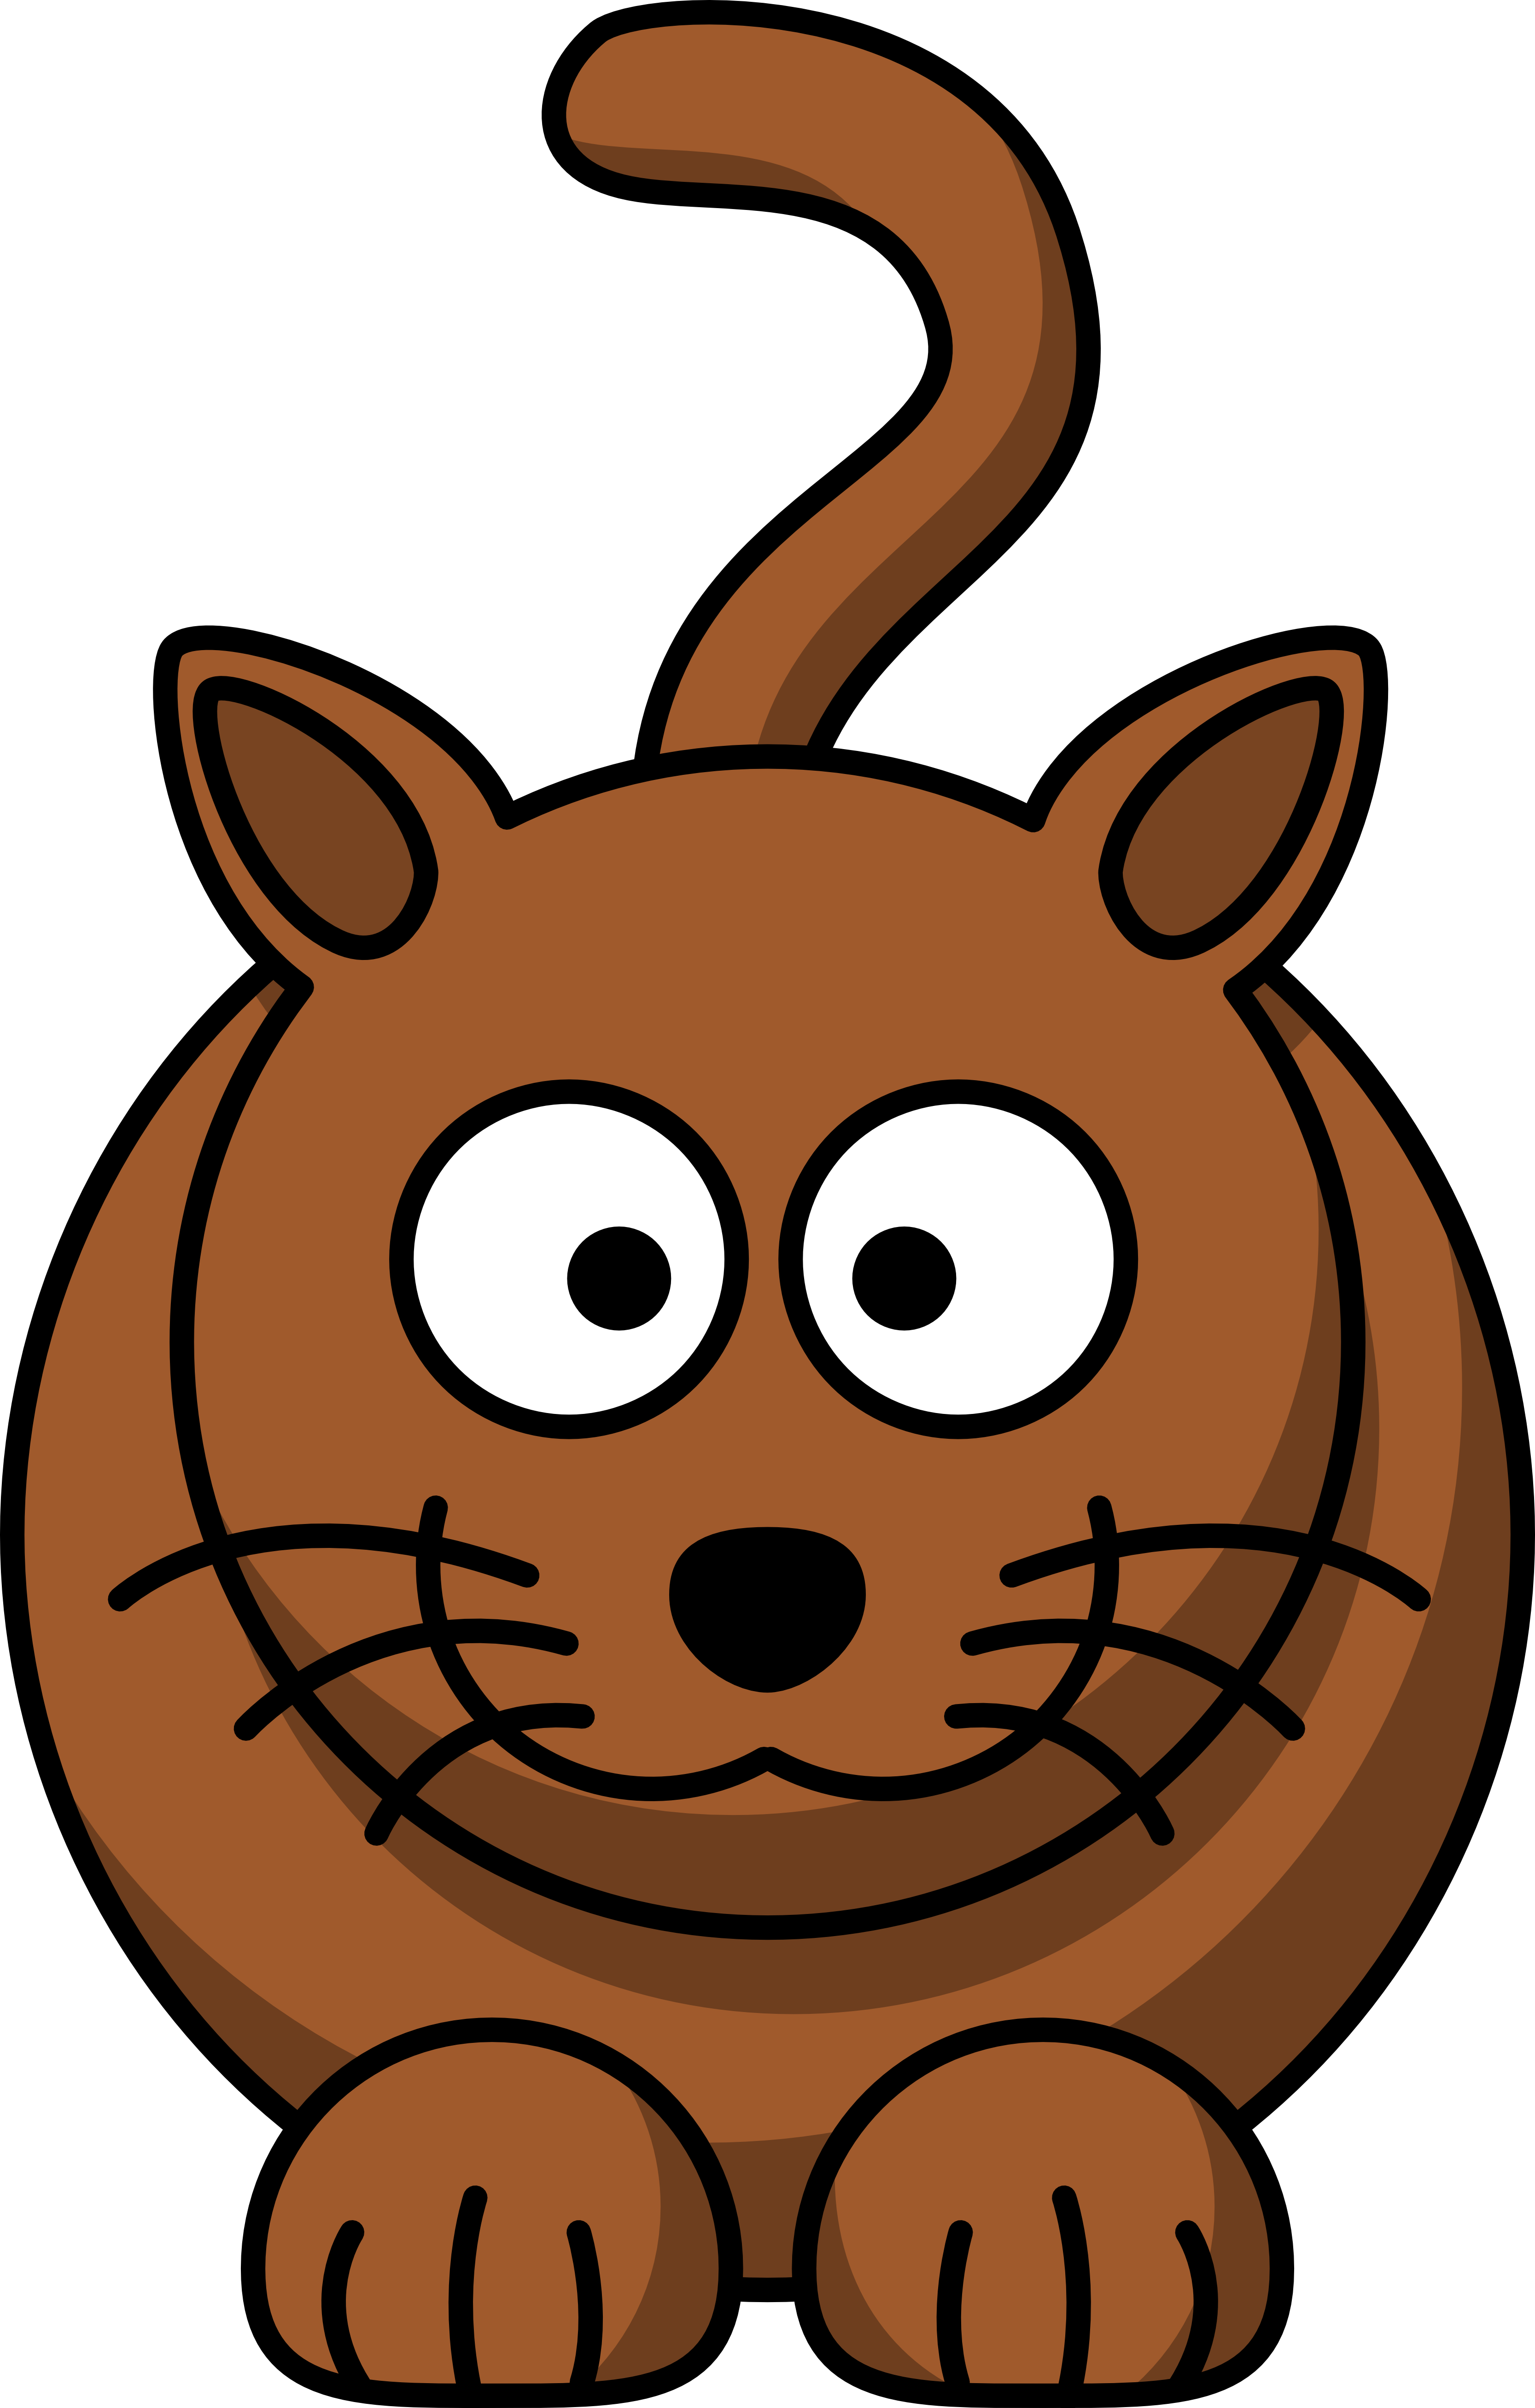 Cartoon brown Cat Clipart free image.